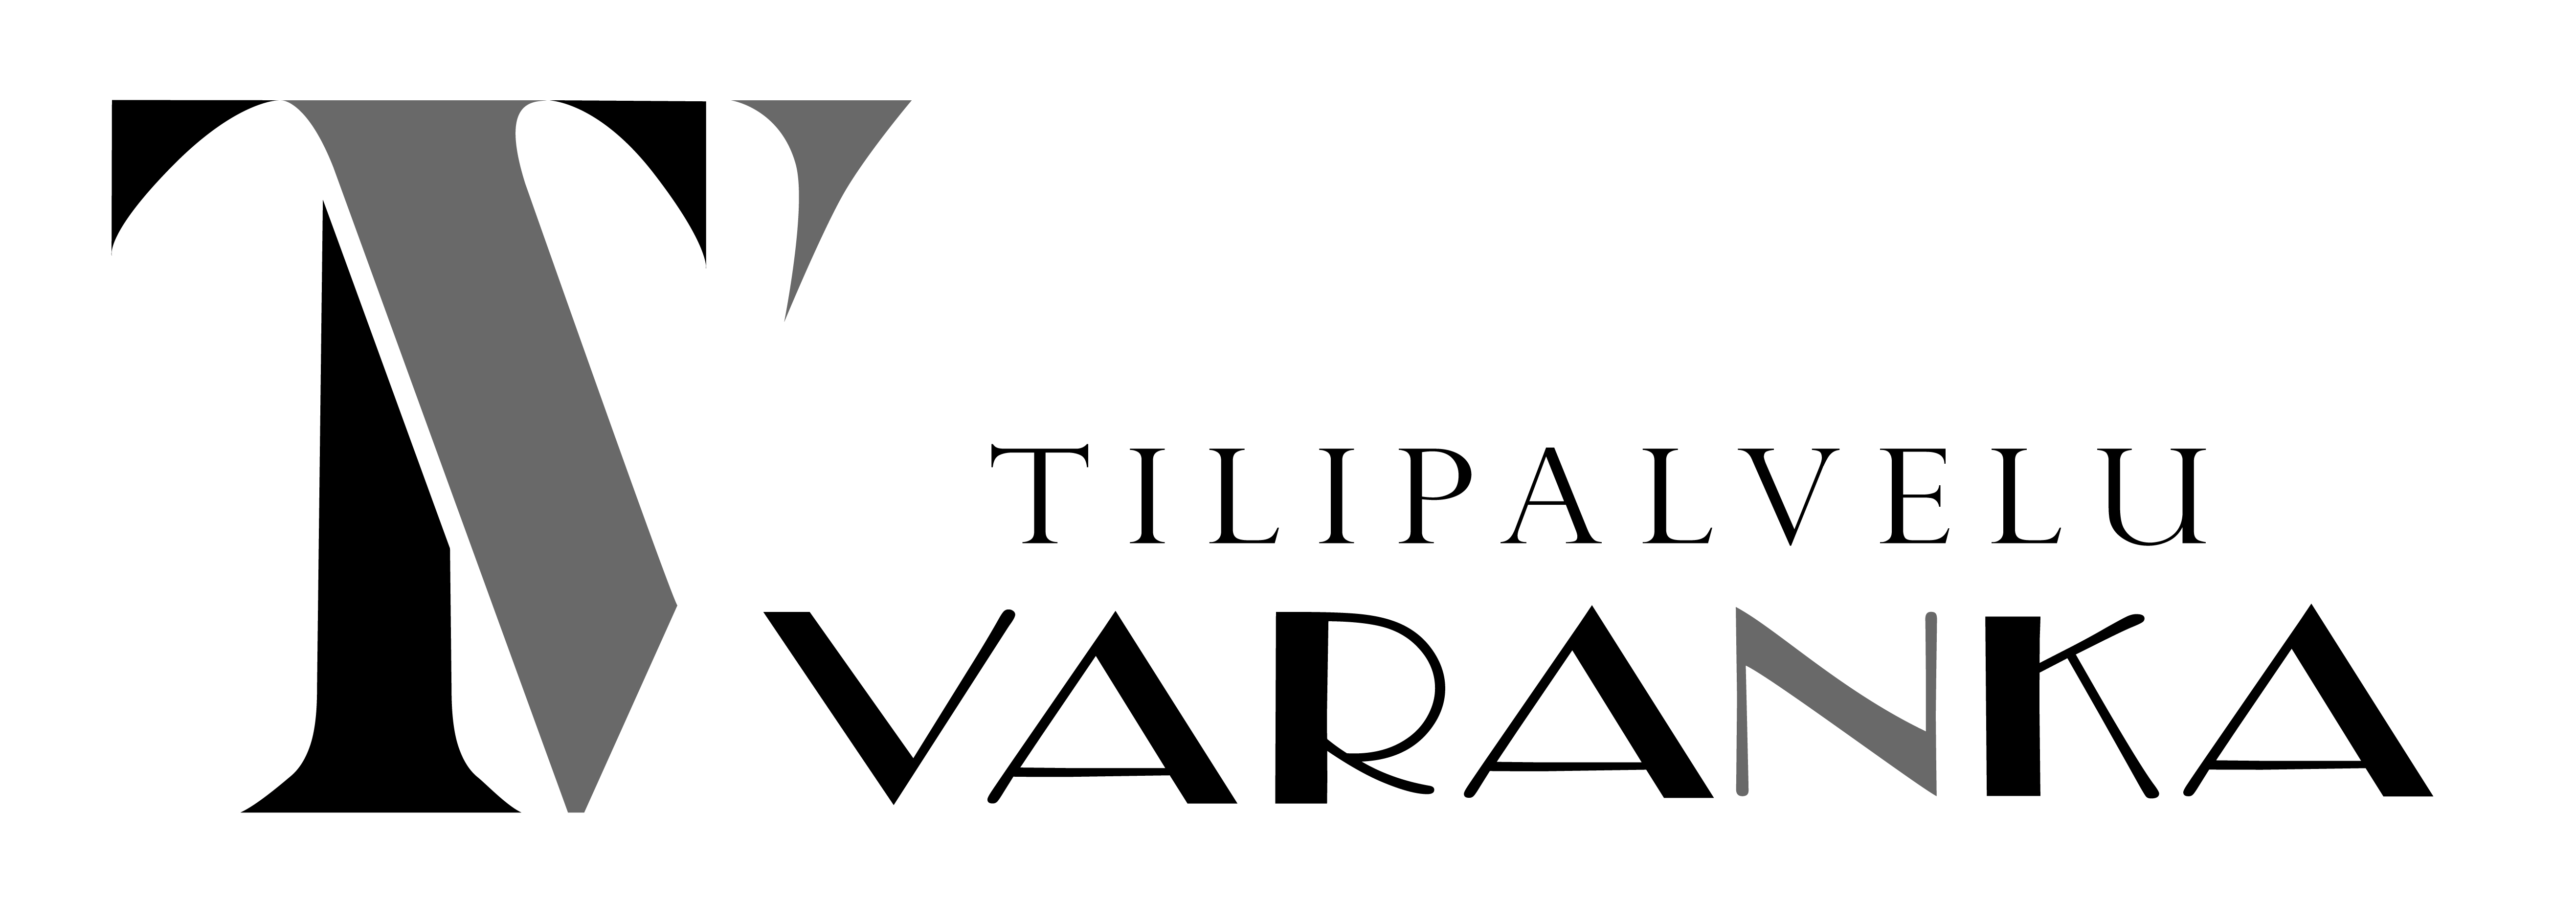 Tilipalvelu Varanka logo.